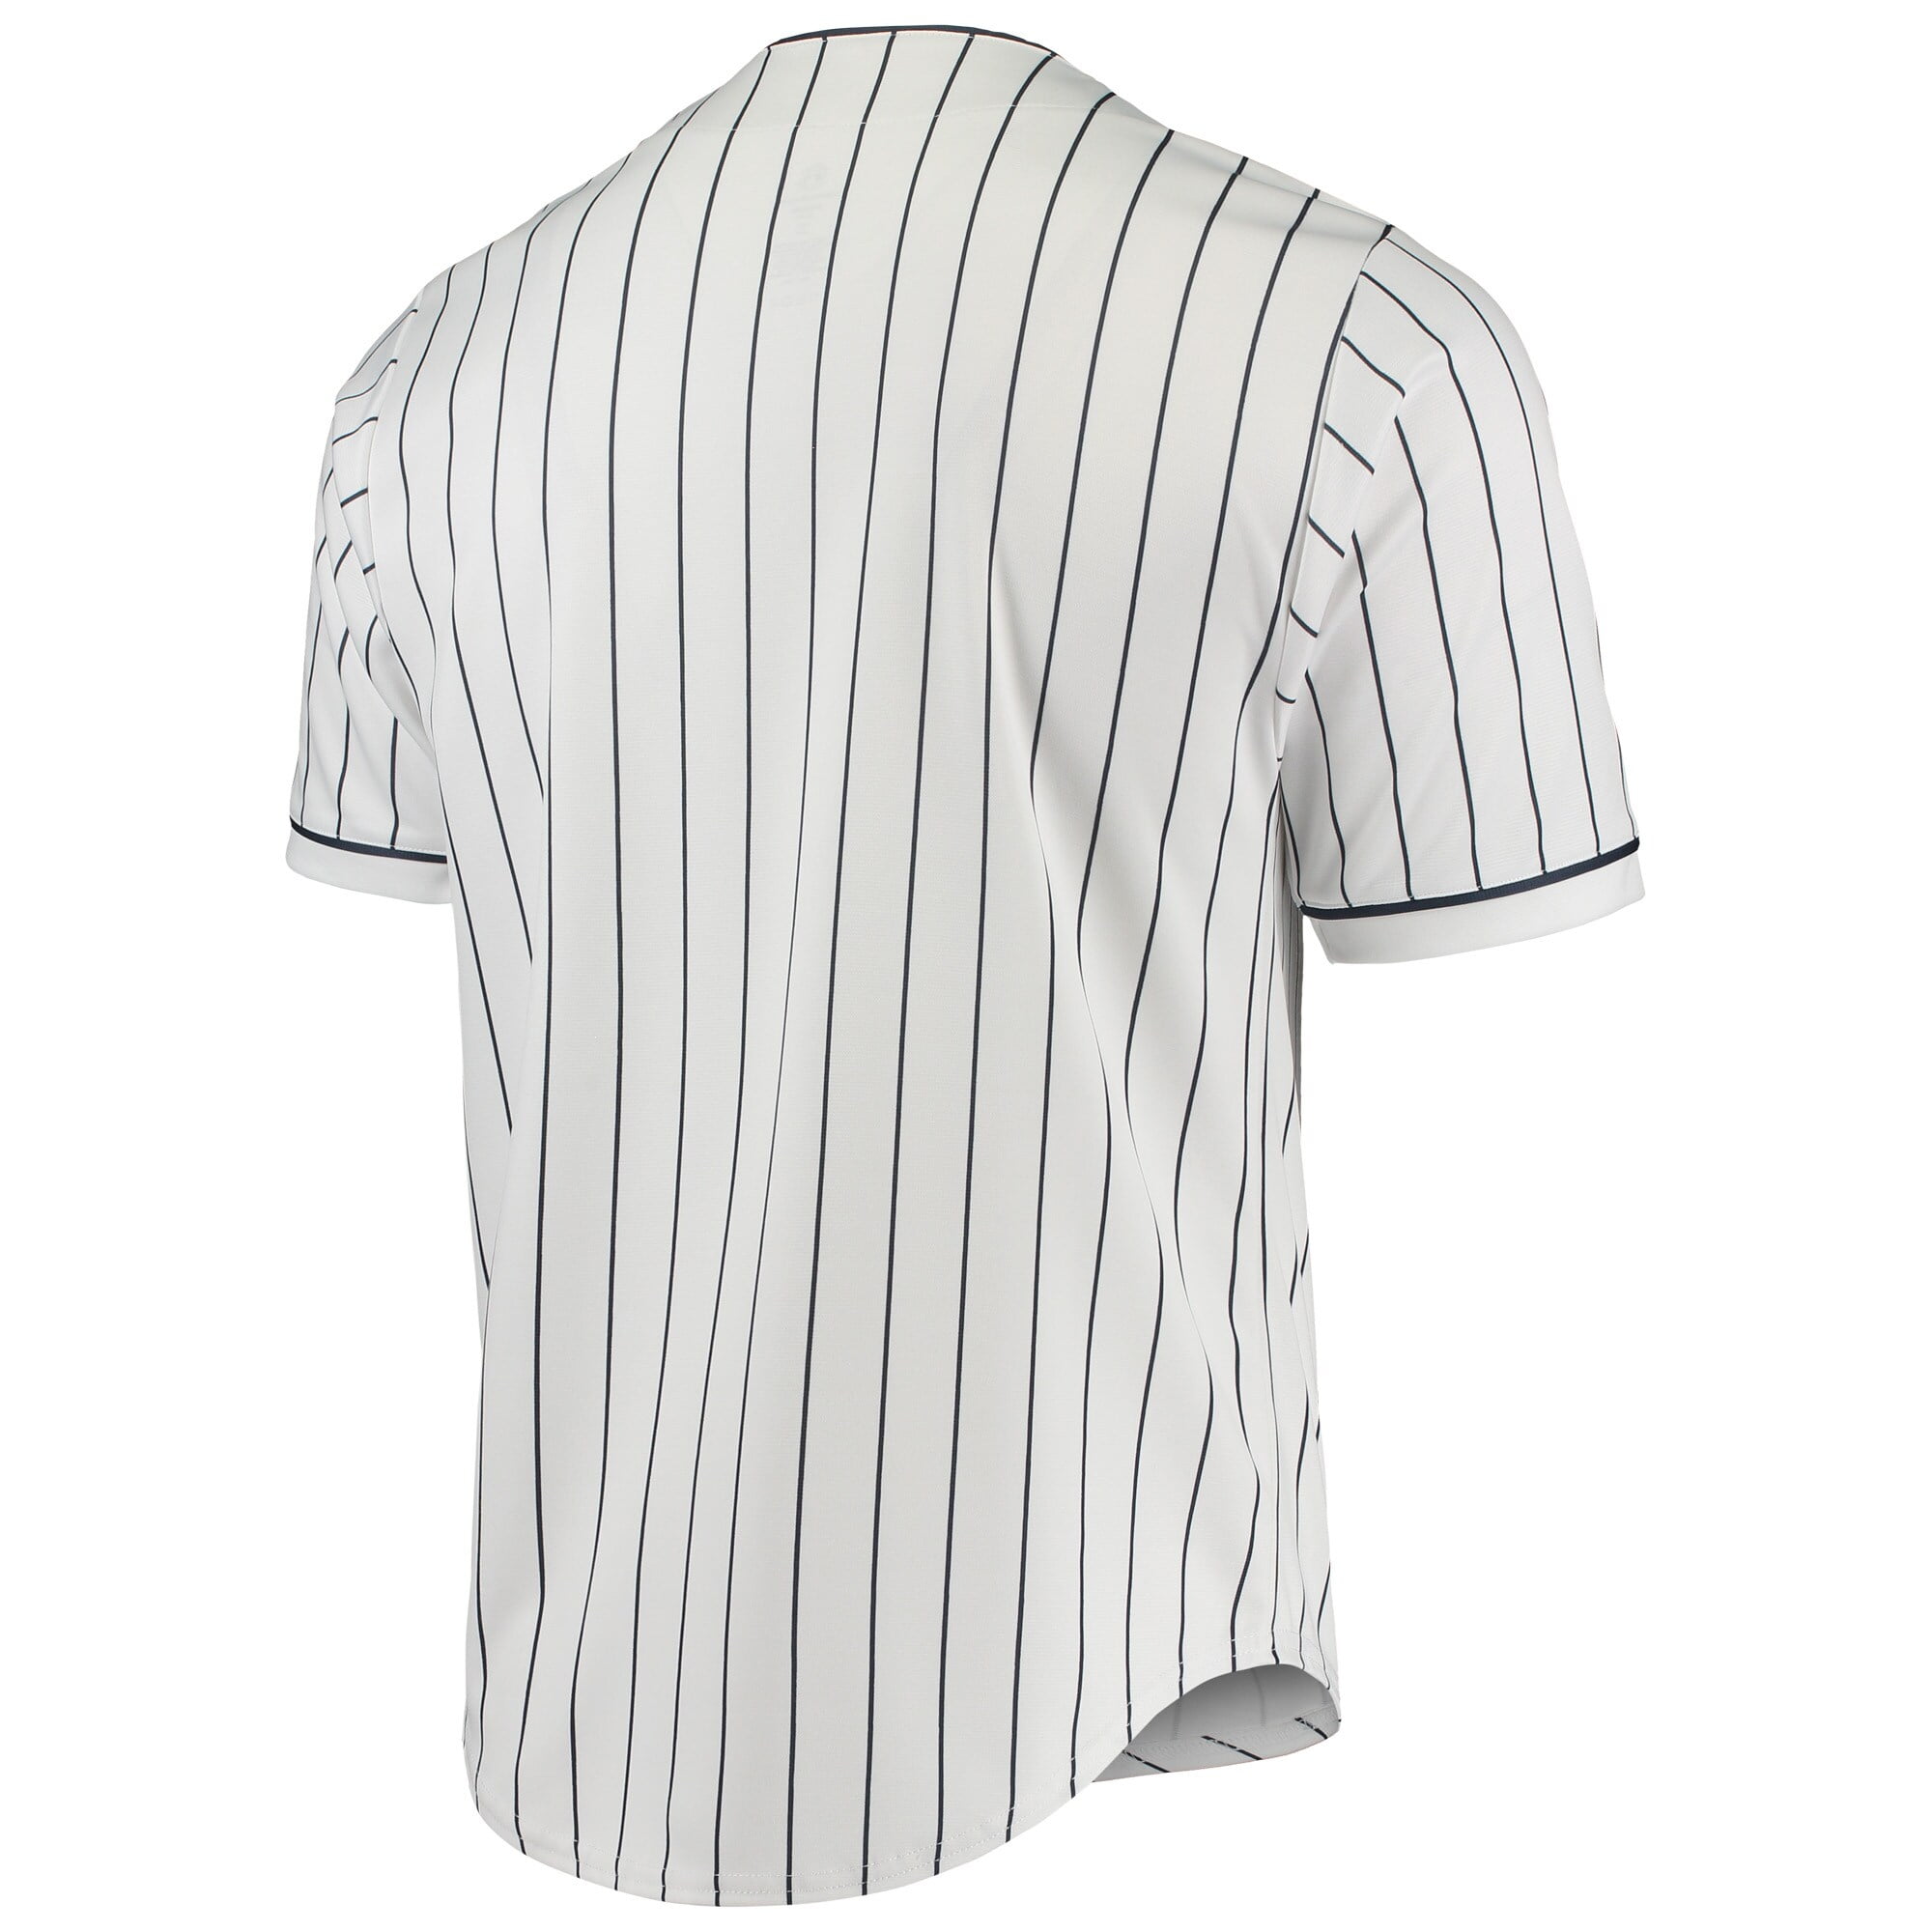 Milwaukee Brewers men's XL stitched MLB baseball jersey True Fan New  Old Stock